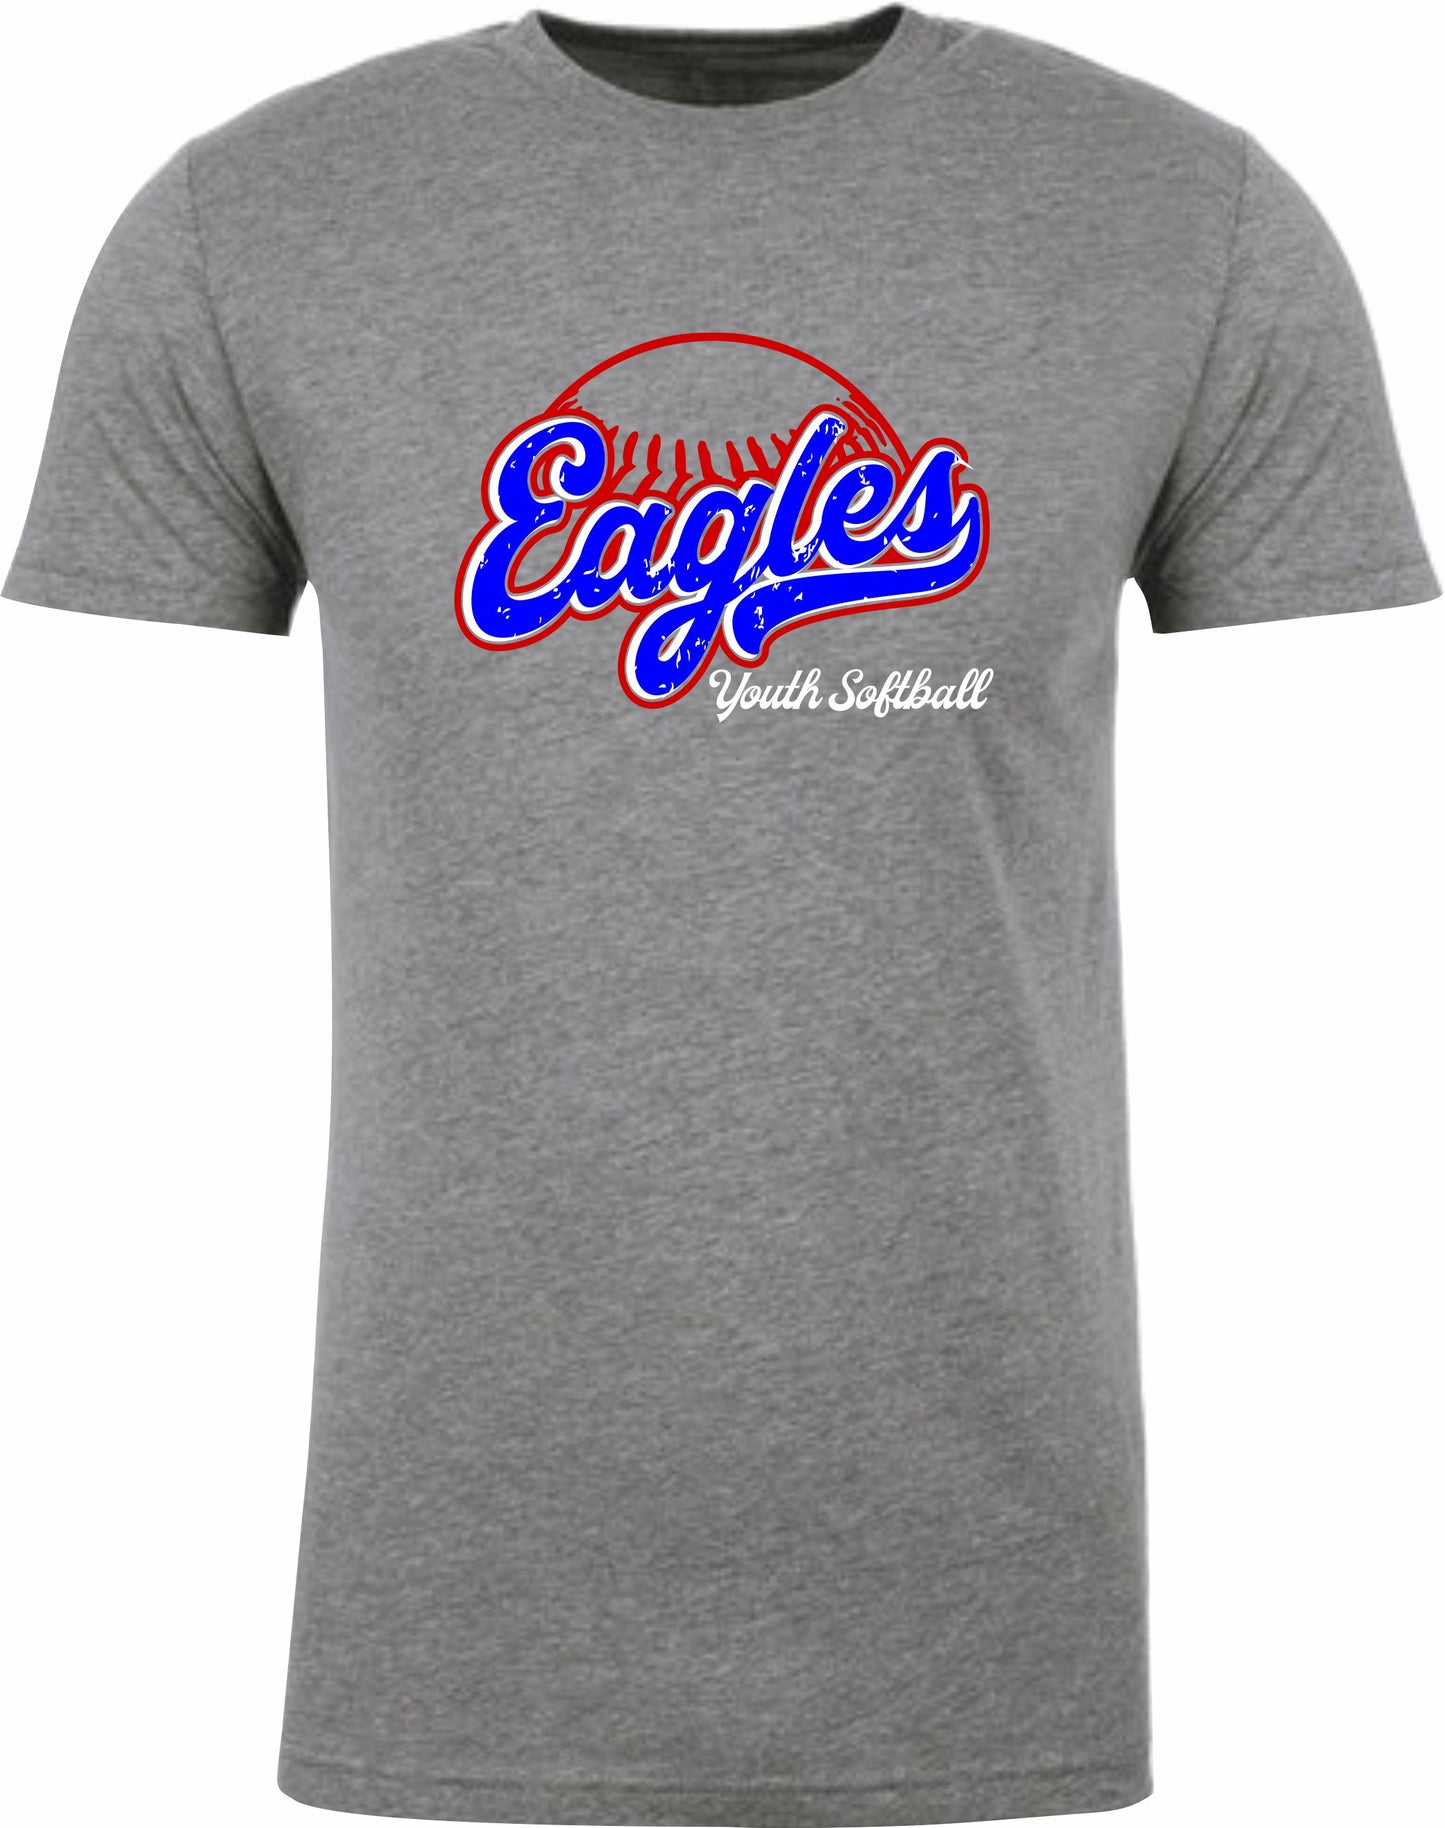 Eagles Youth Softball T-Shirt